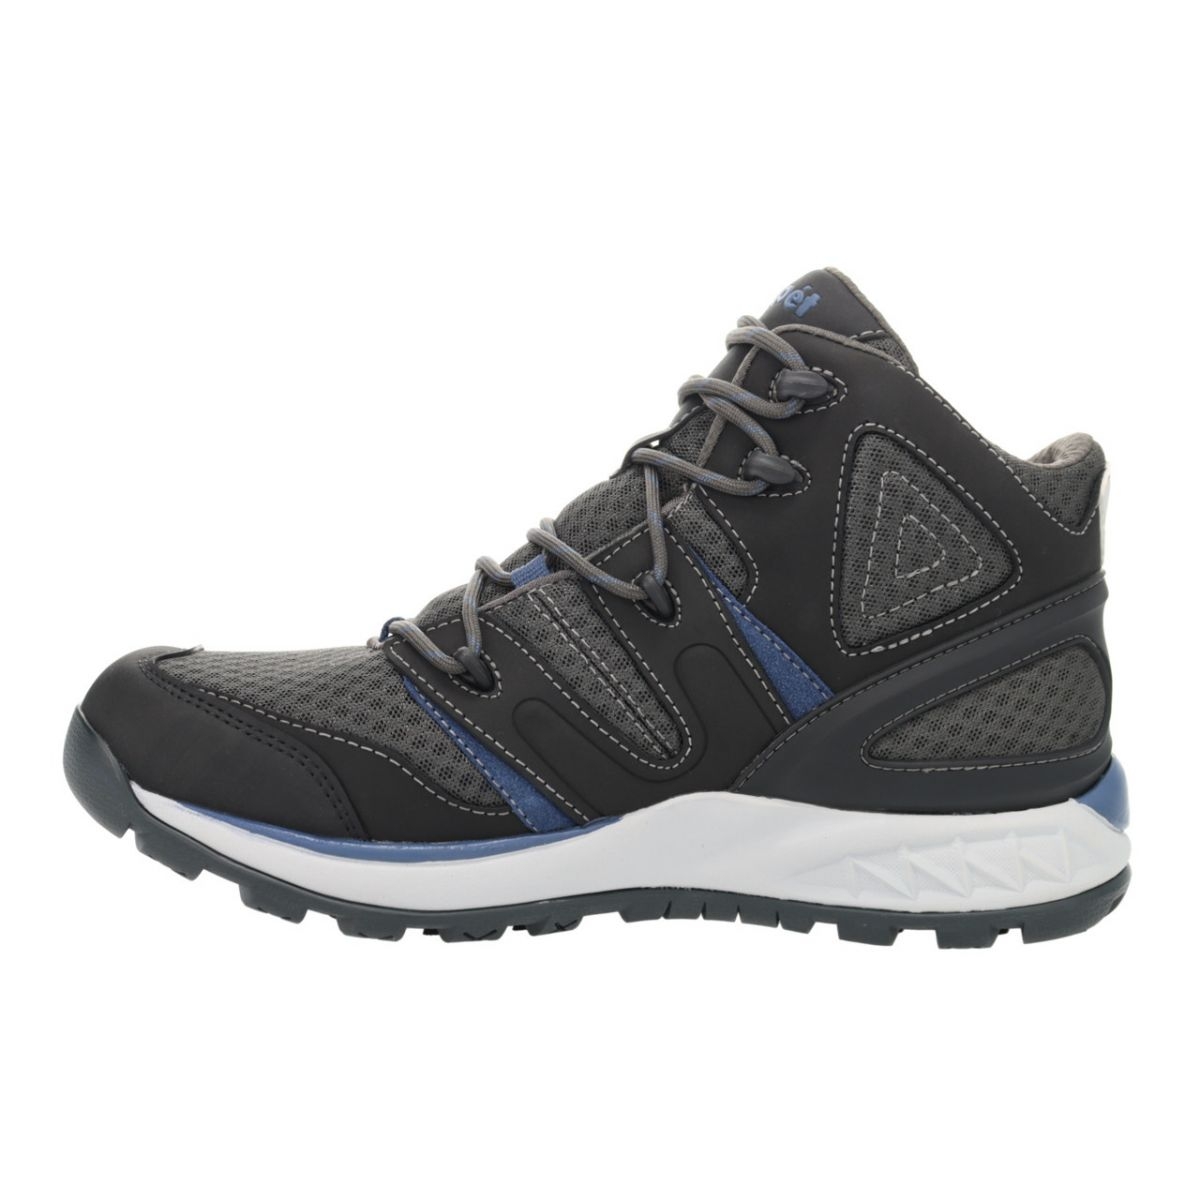 Propet Men's Veymont Waterproof Hiking Boot Grey/Blue - MOA022SGRB GREY/BLUE - GREY/BLUE, 10 XX-Wide